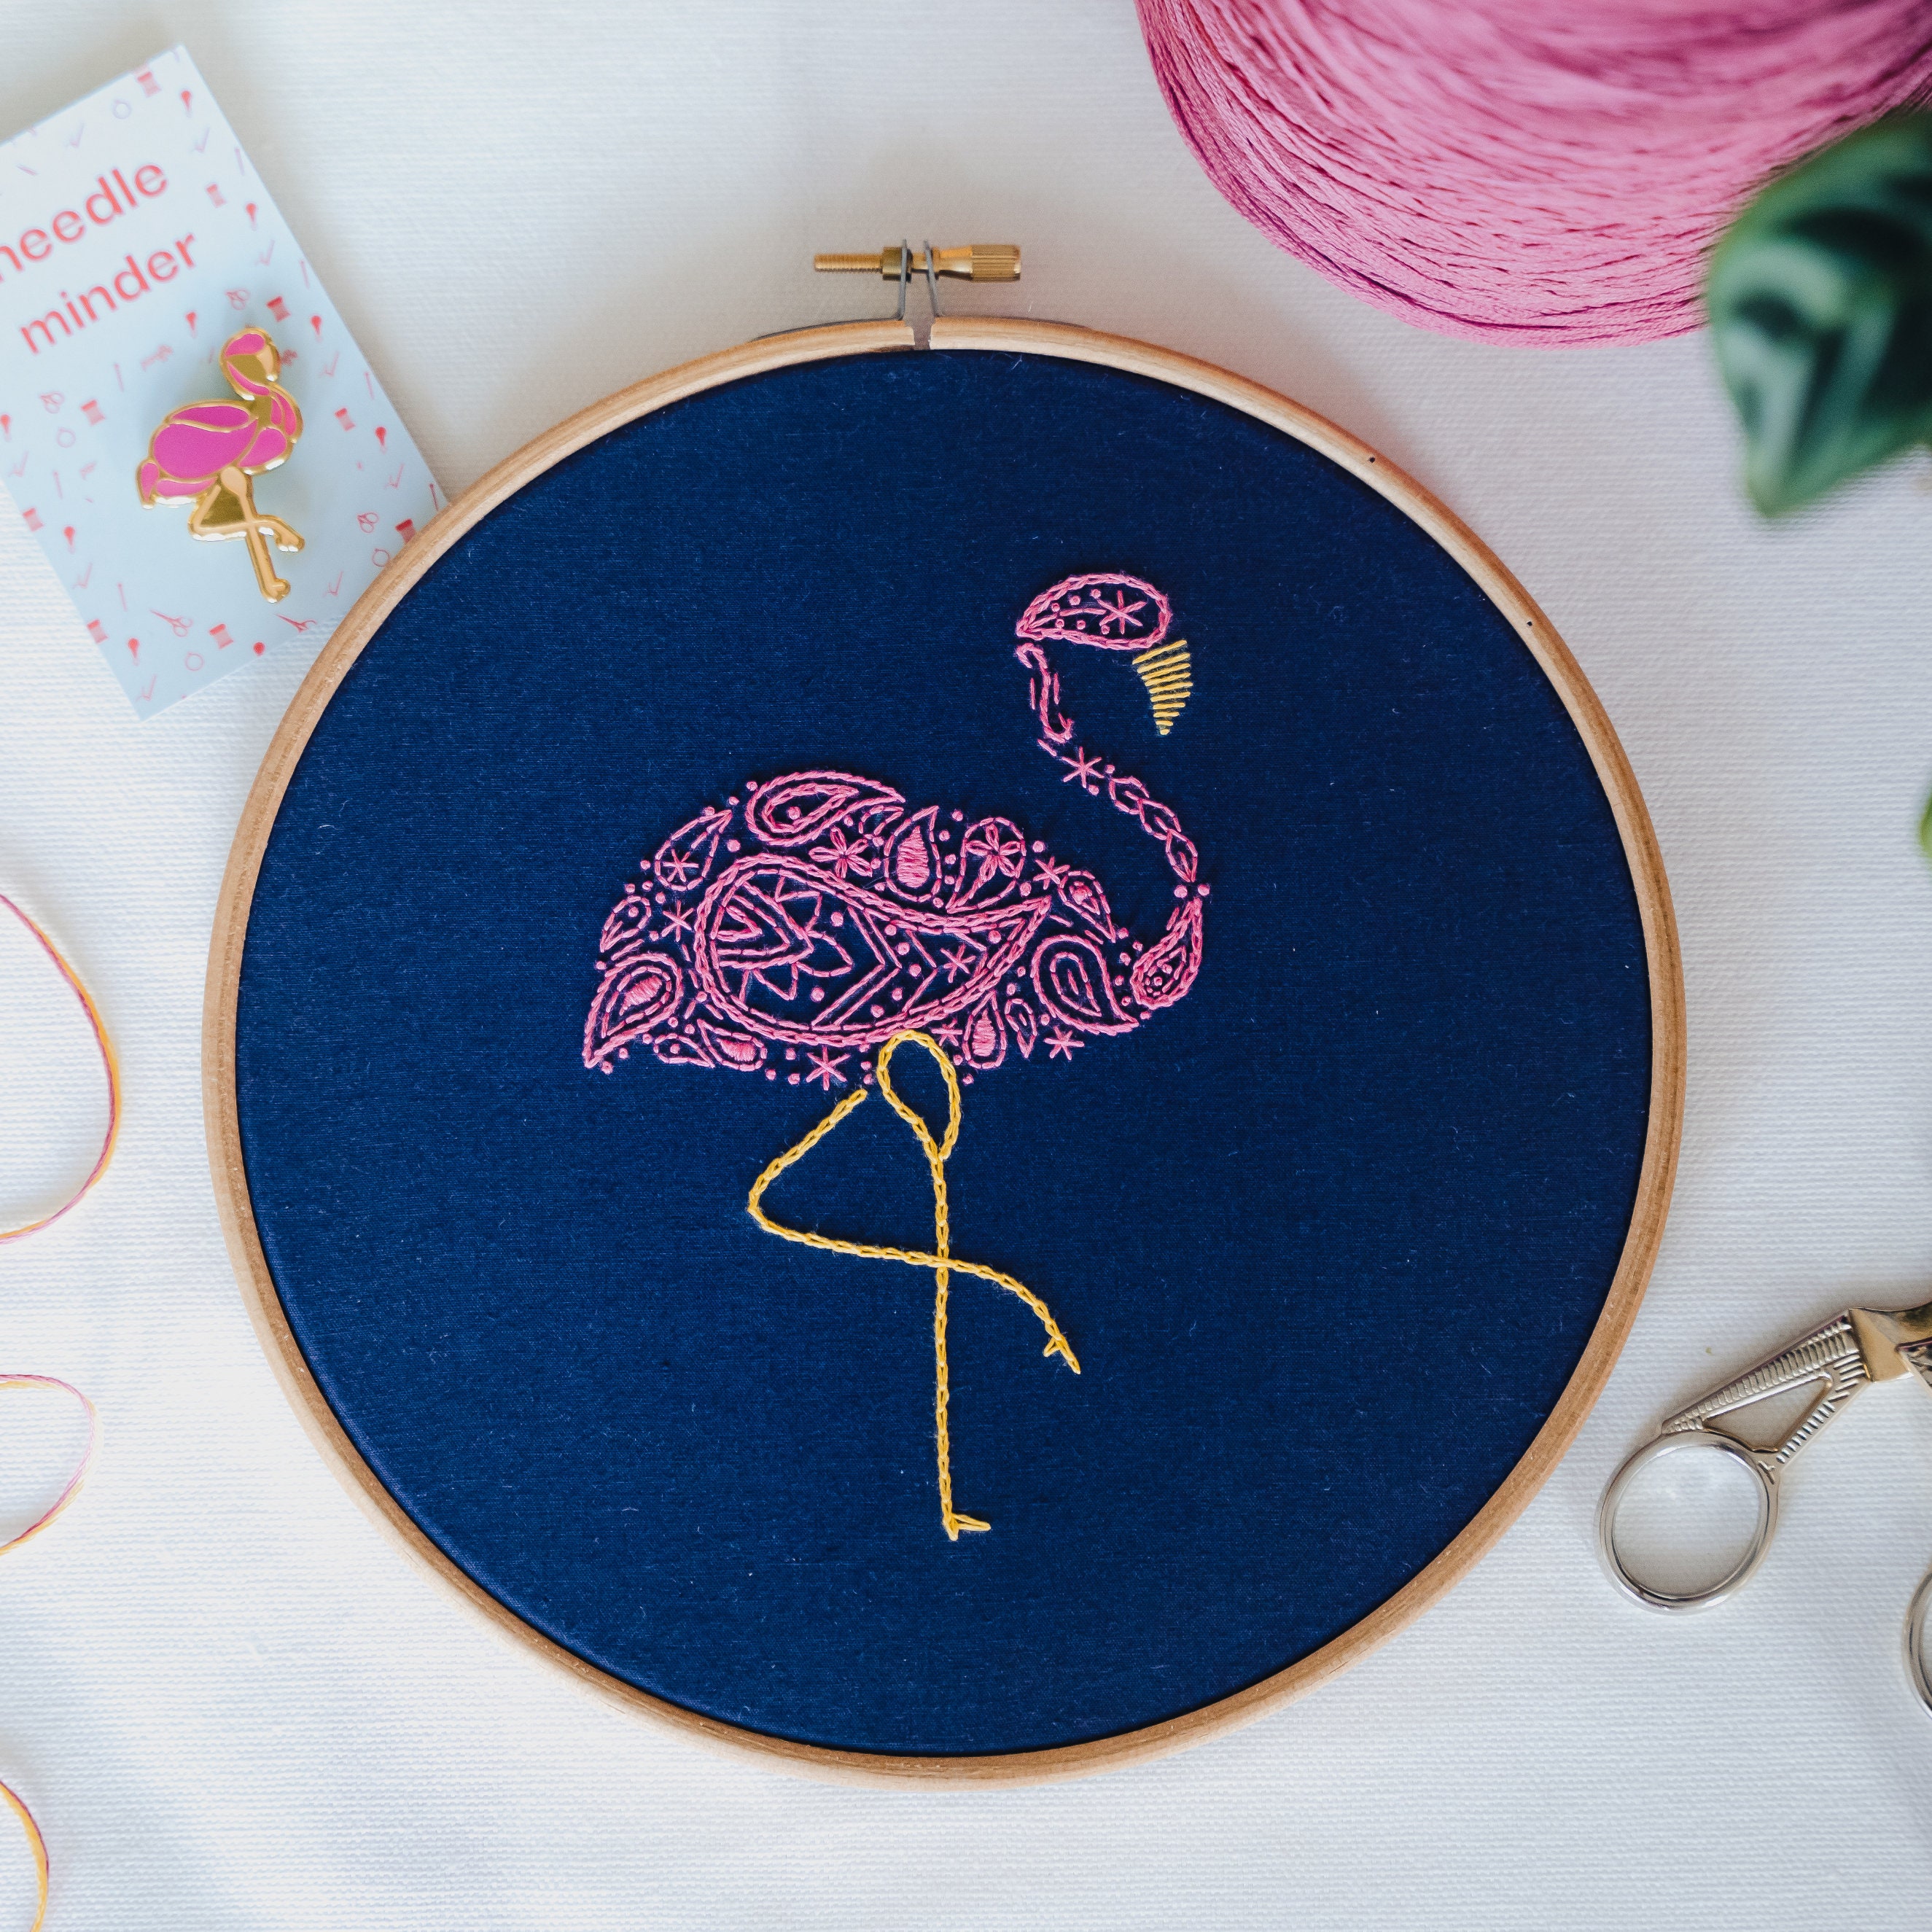 Flamingo Lingo - Hand Stitch Embroidery Transfer Pattern